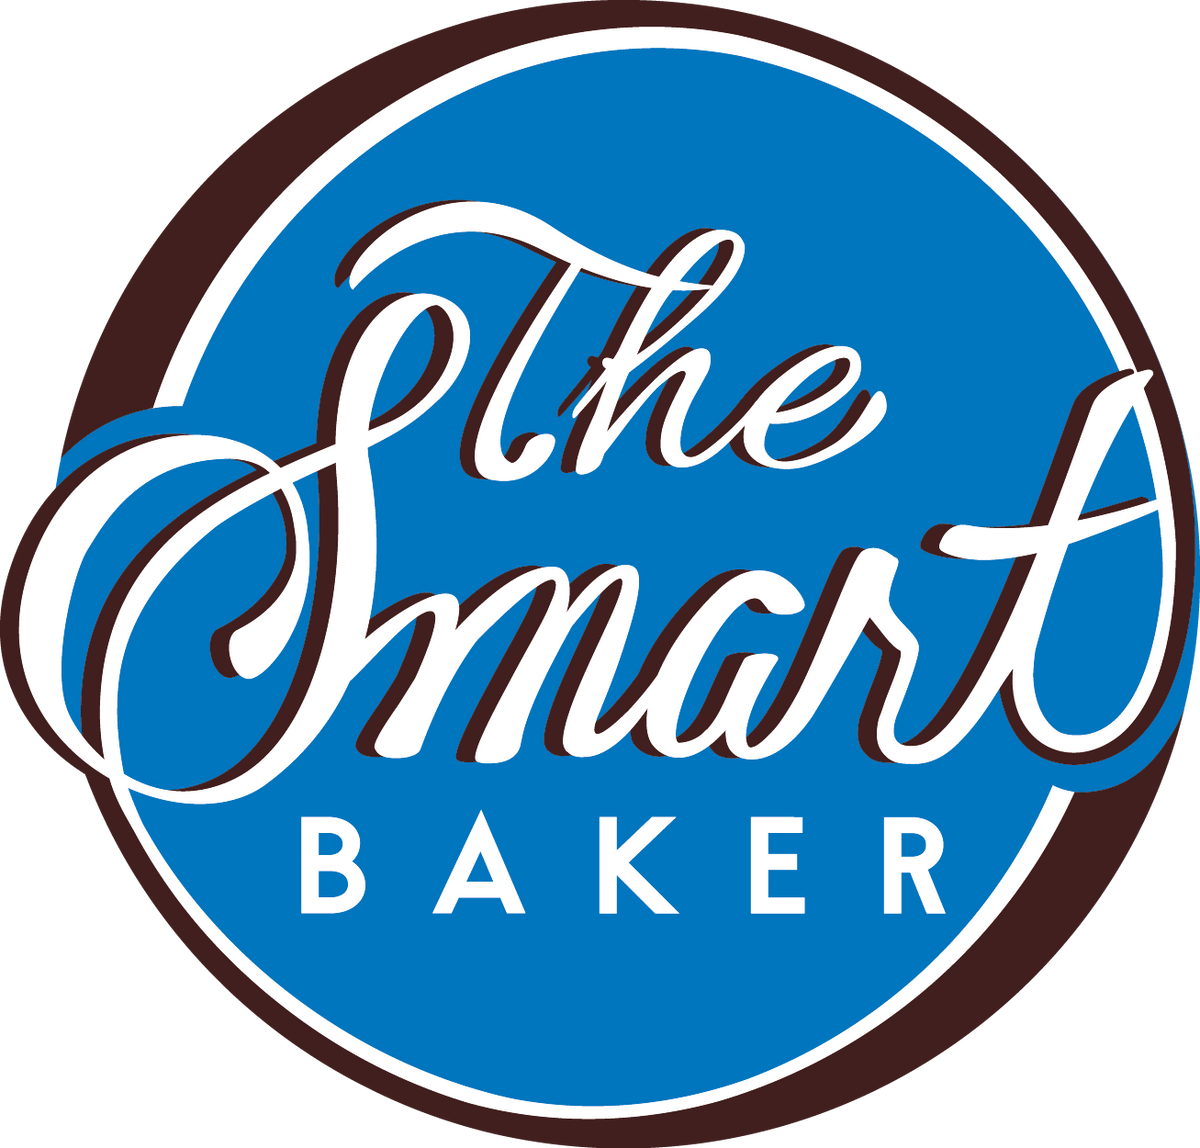 Barbara's Deal For The Smart Baker Falls Through